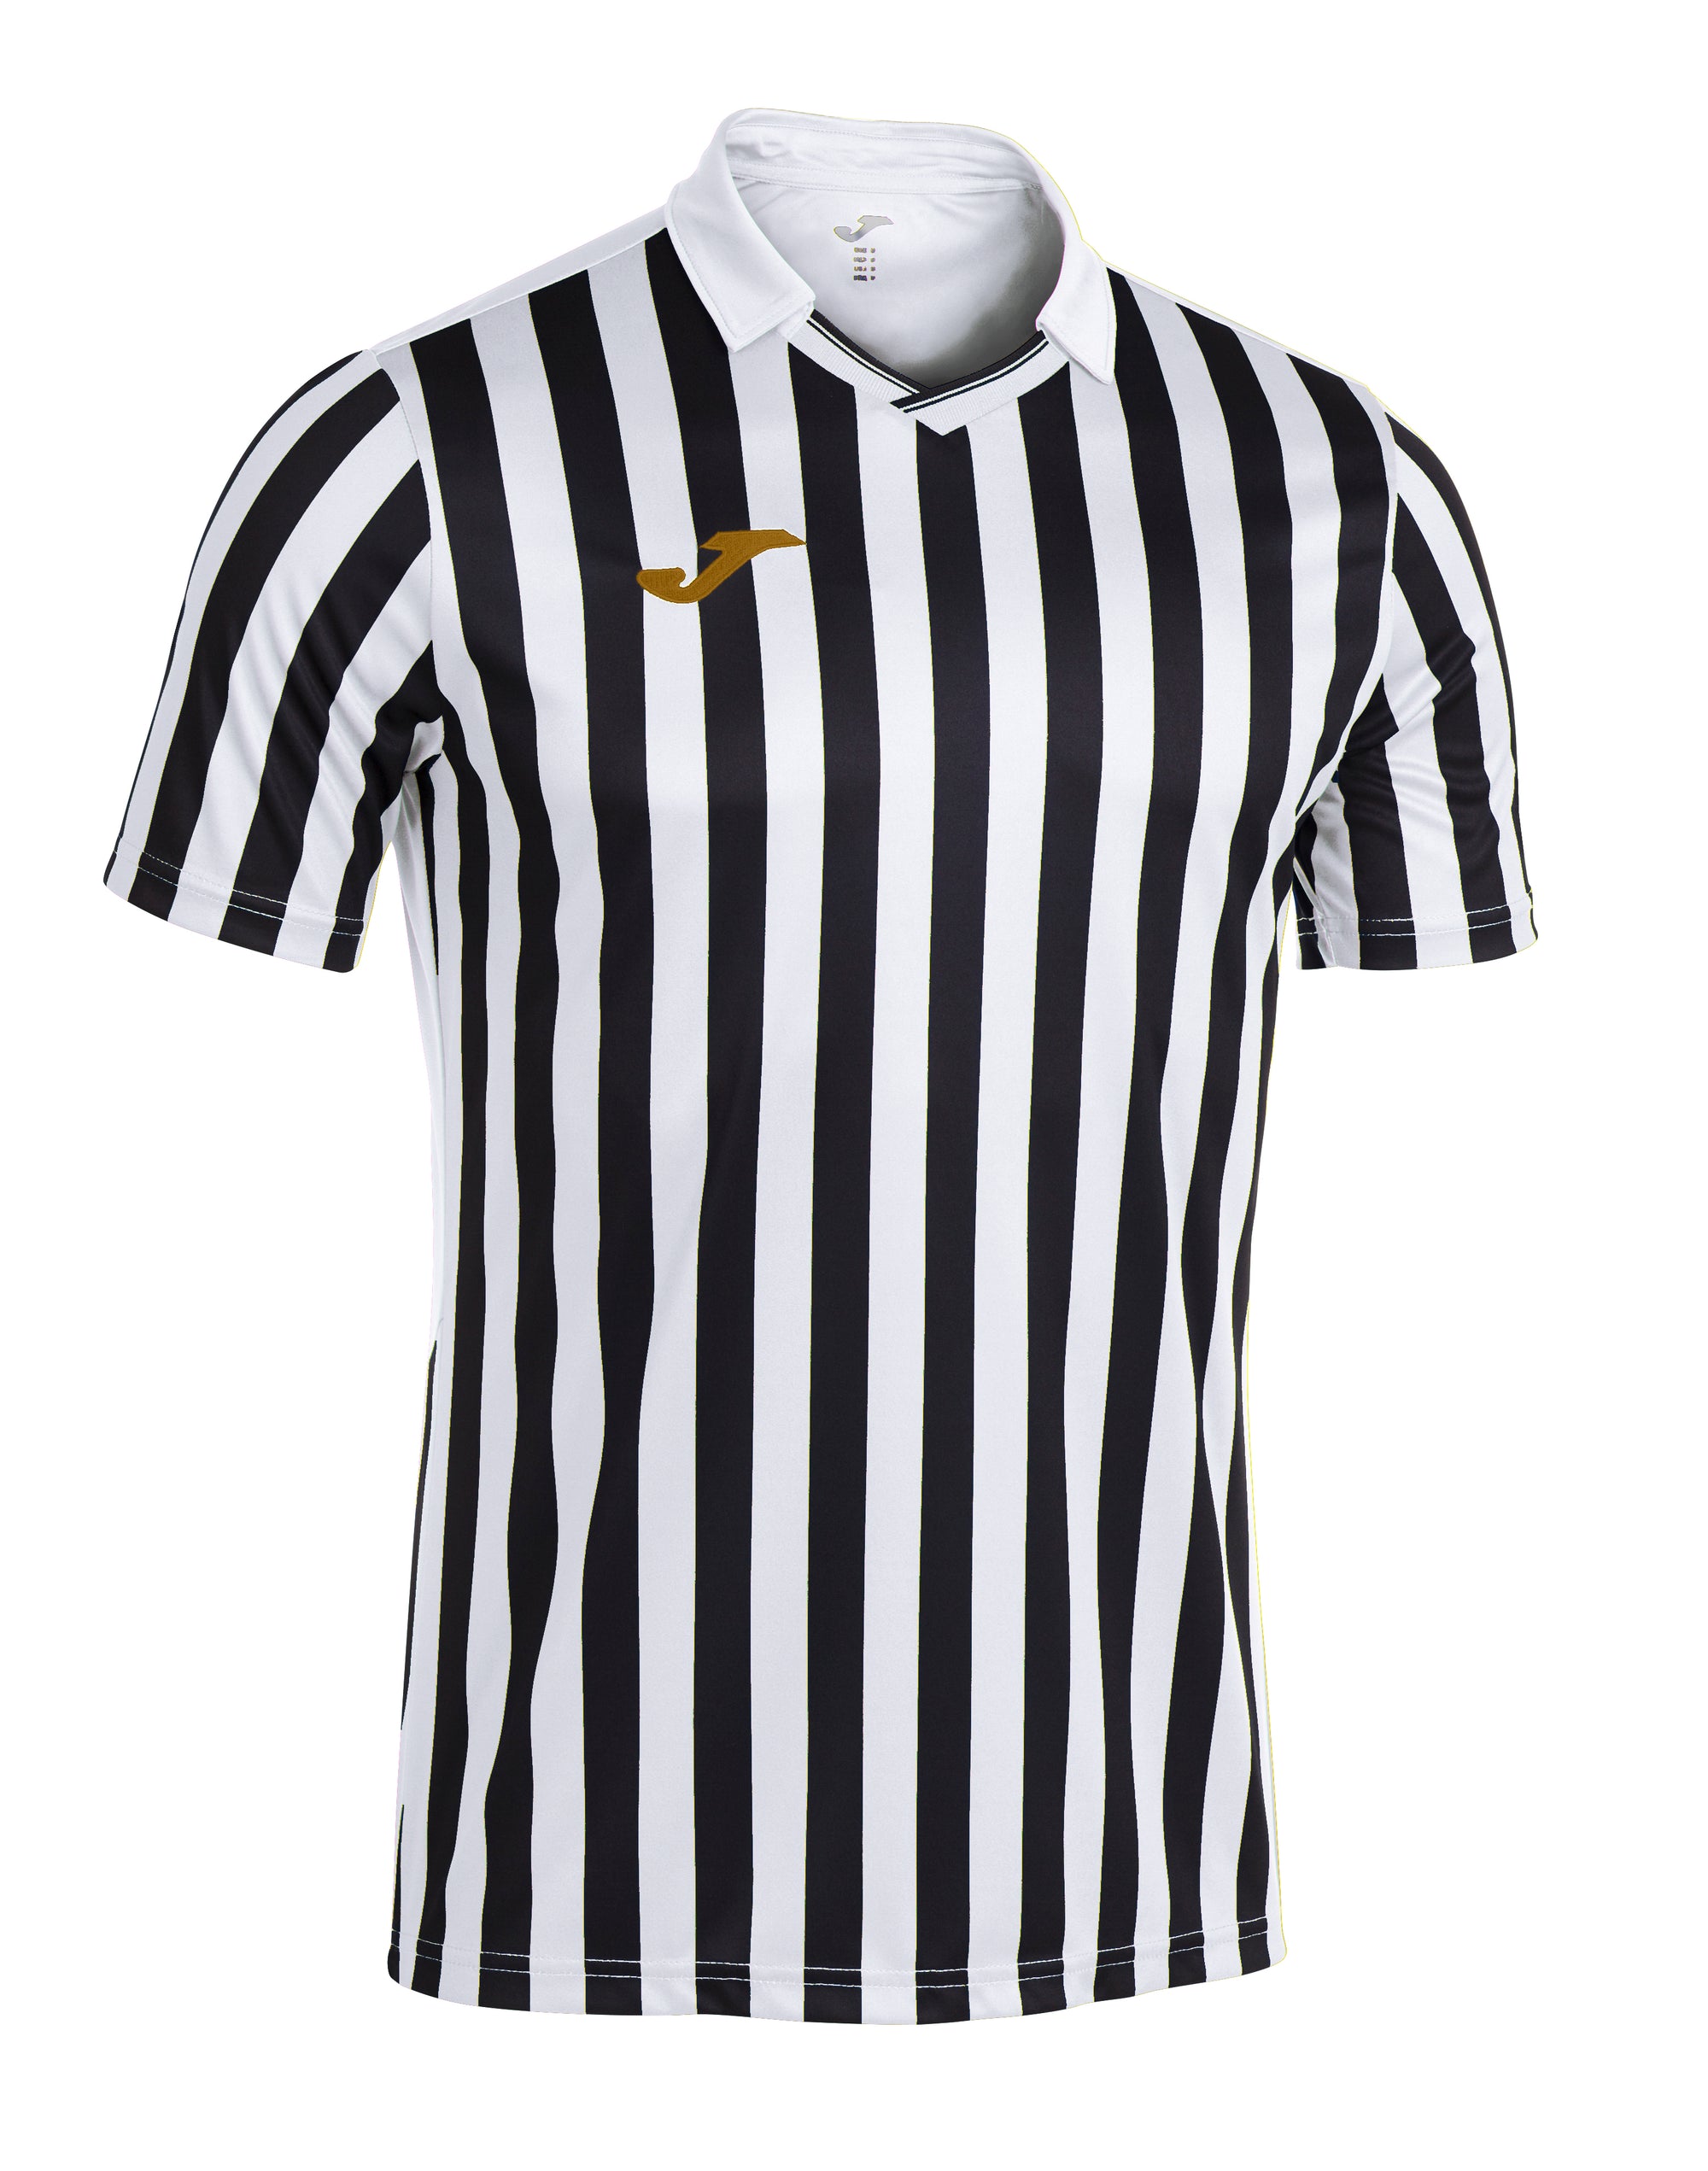 Joma Copa II Short Sleeved T-Shirt - White/Black